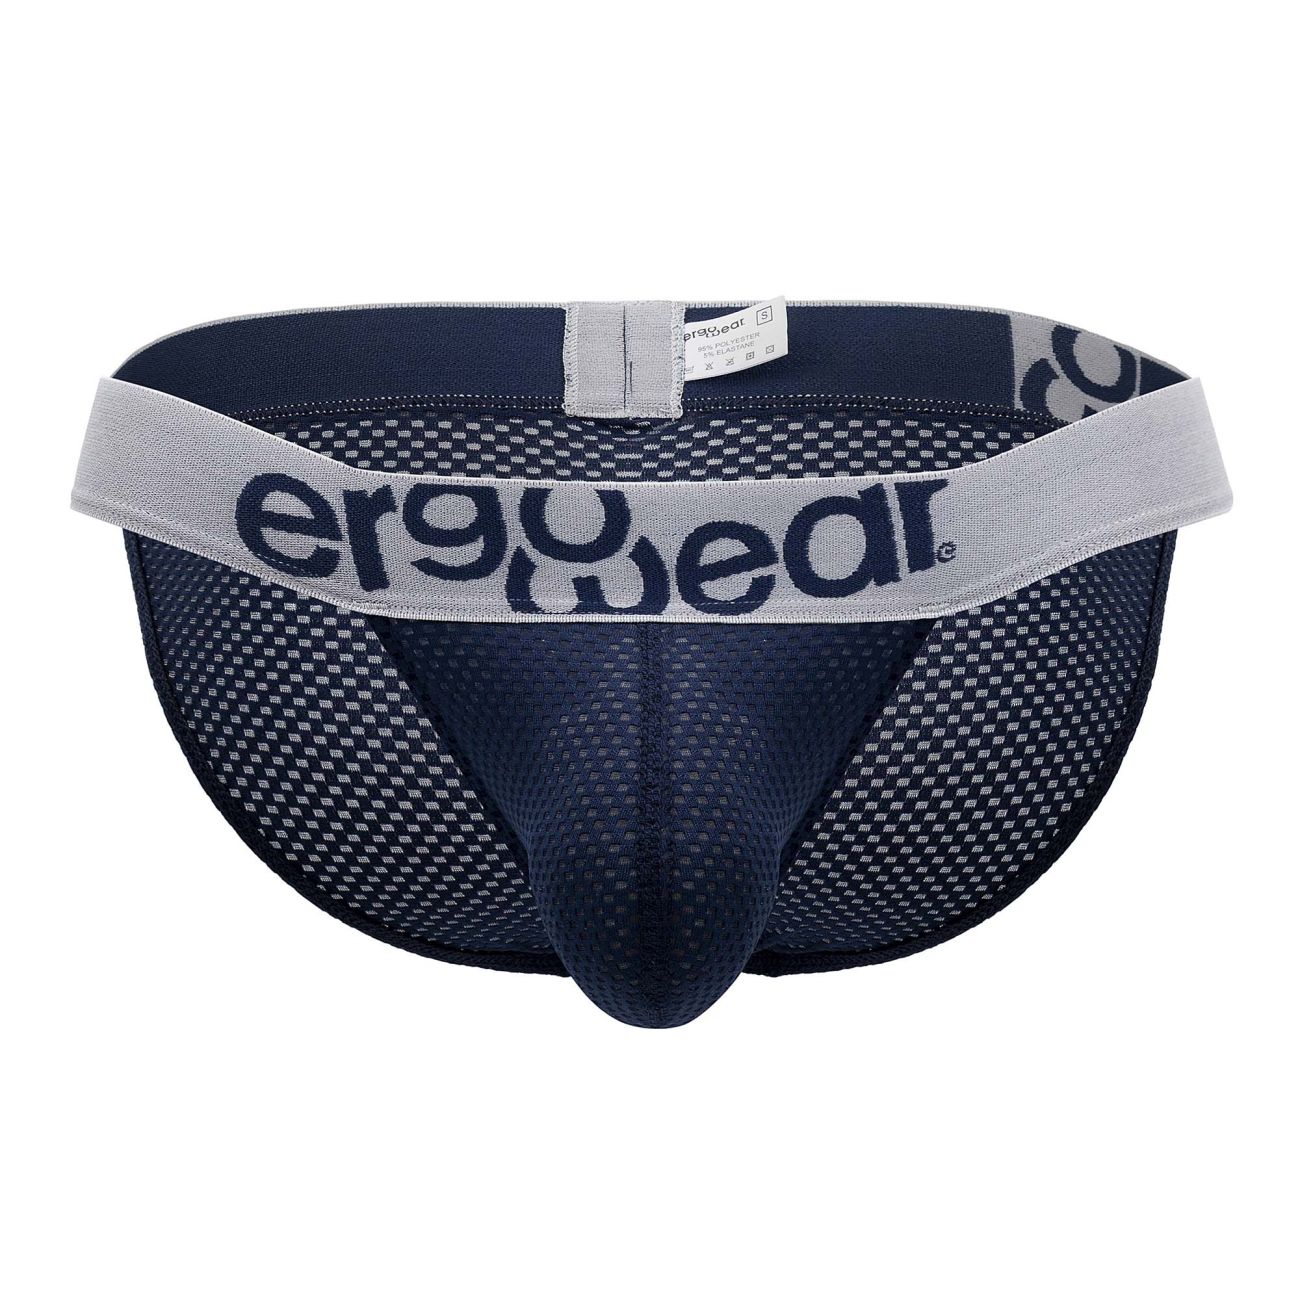 ErgoWear EW1208 MAX MESH Bikini